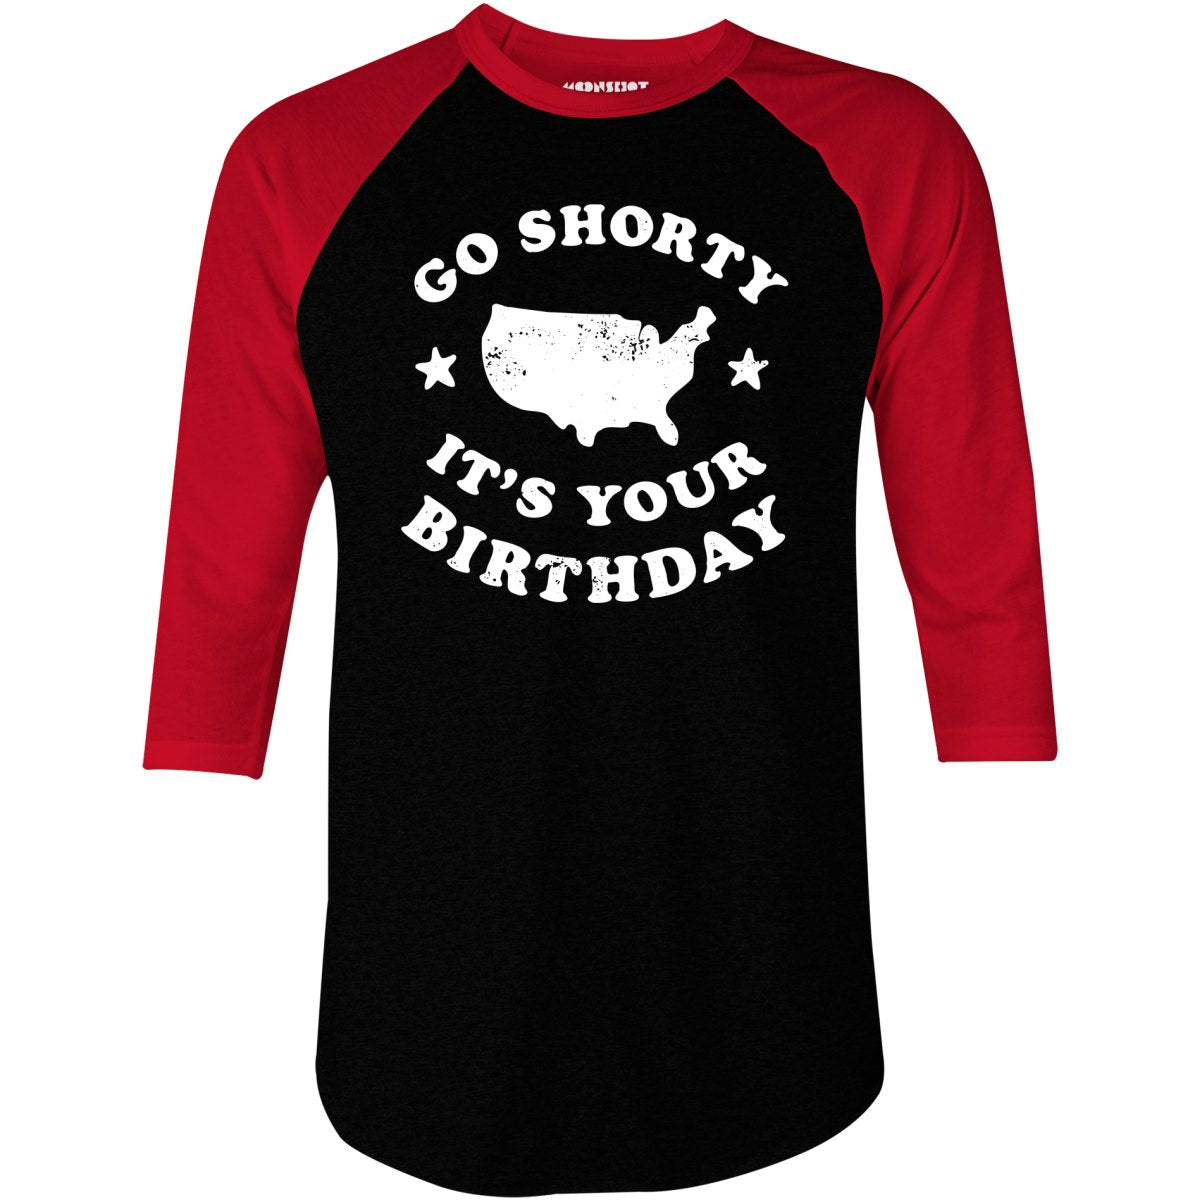 Go Shorty It's Your Birthday - 3/4 Sleeve Raglan T-Shirt